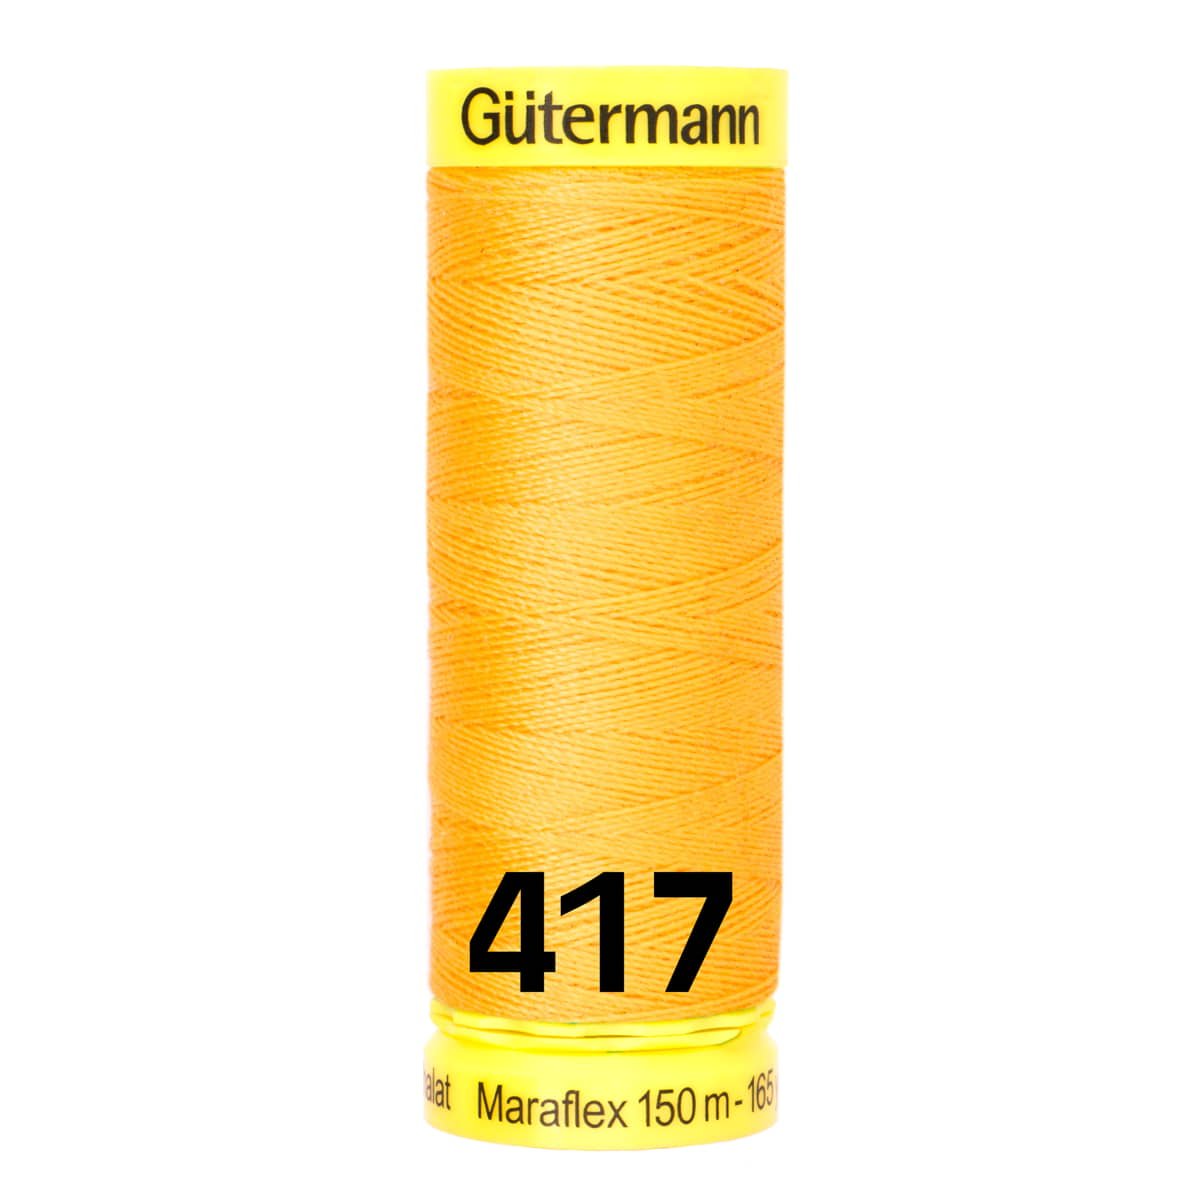 Gütermann MaraFlex 150m - 417 ei geel GUTERMANN-MARAFLEX-150-417 4029394998690 - Fourniturenkraam.nl